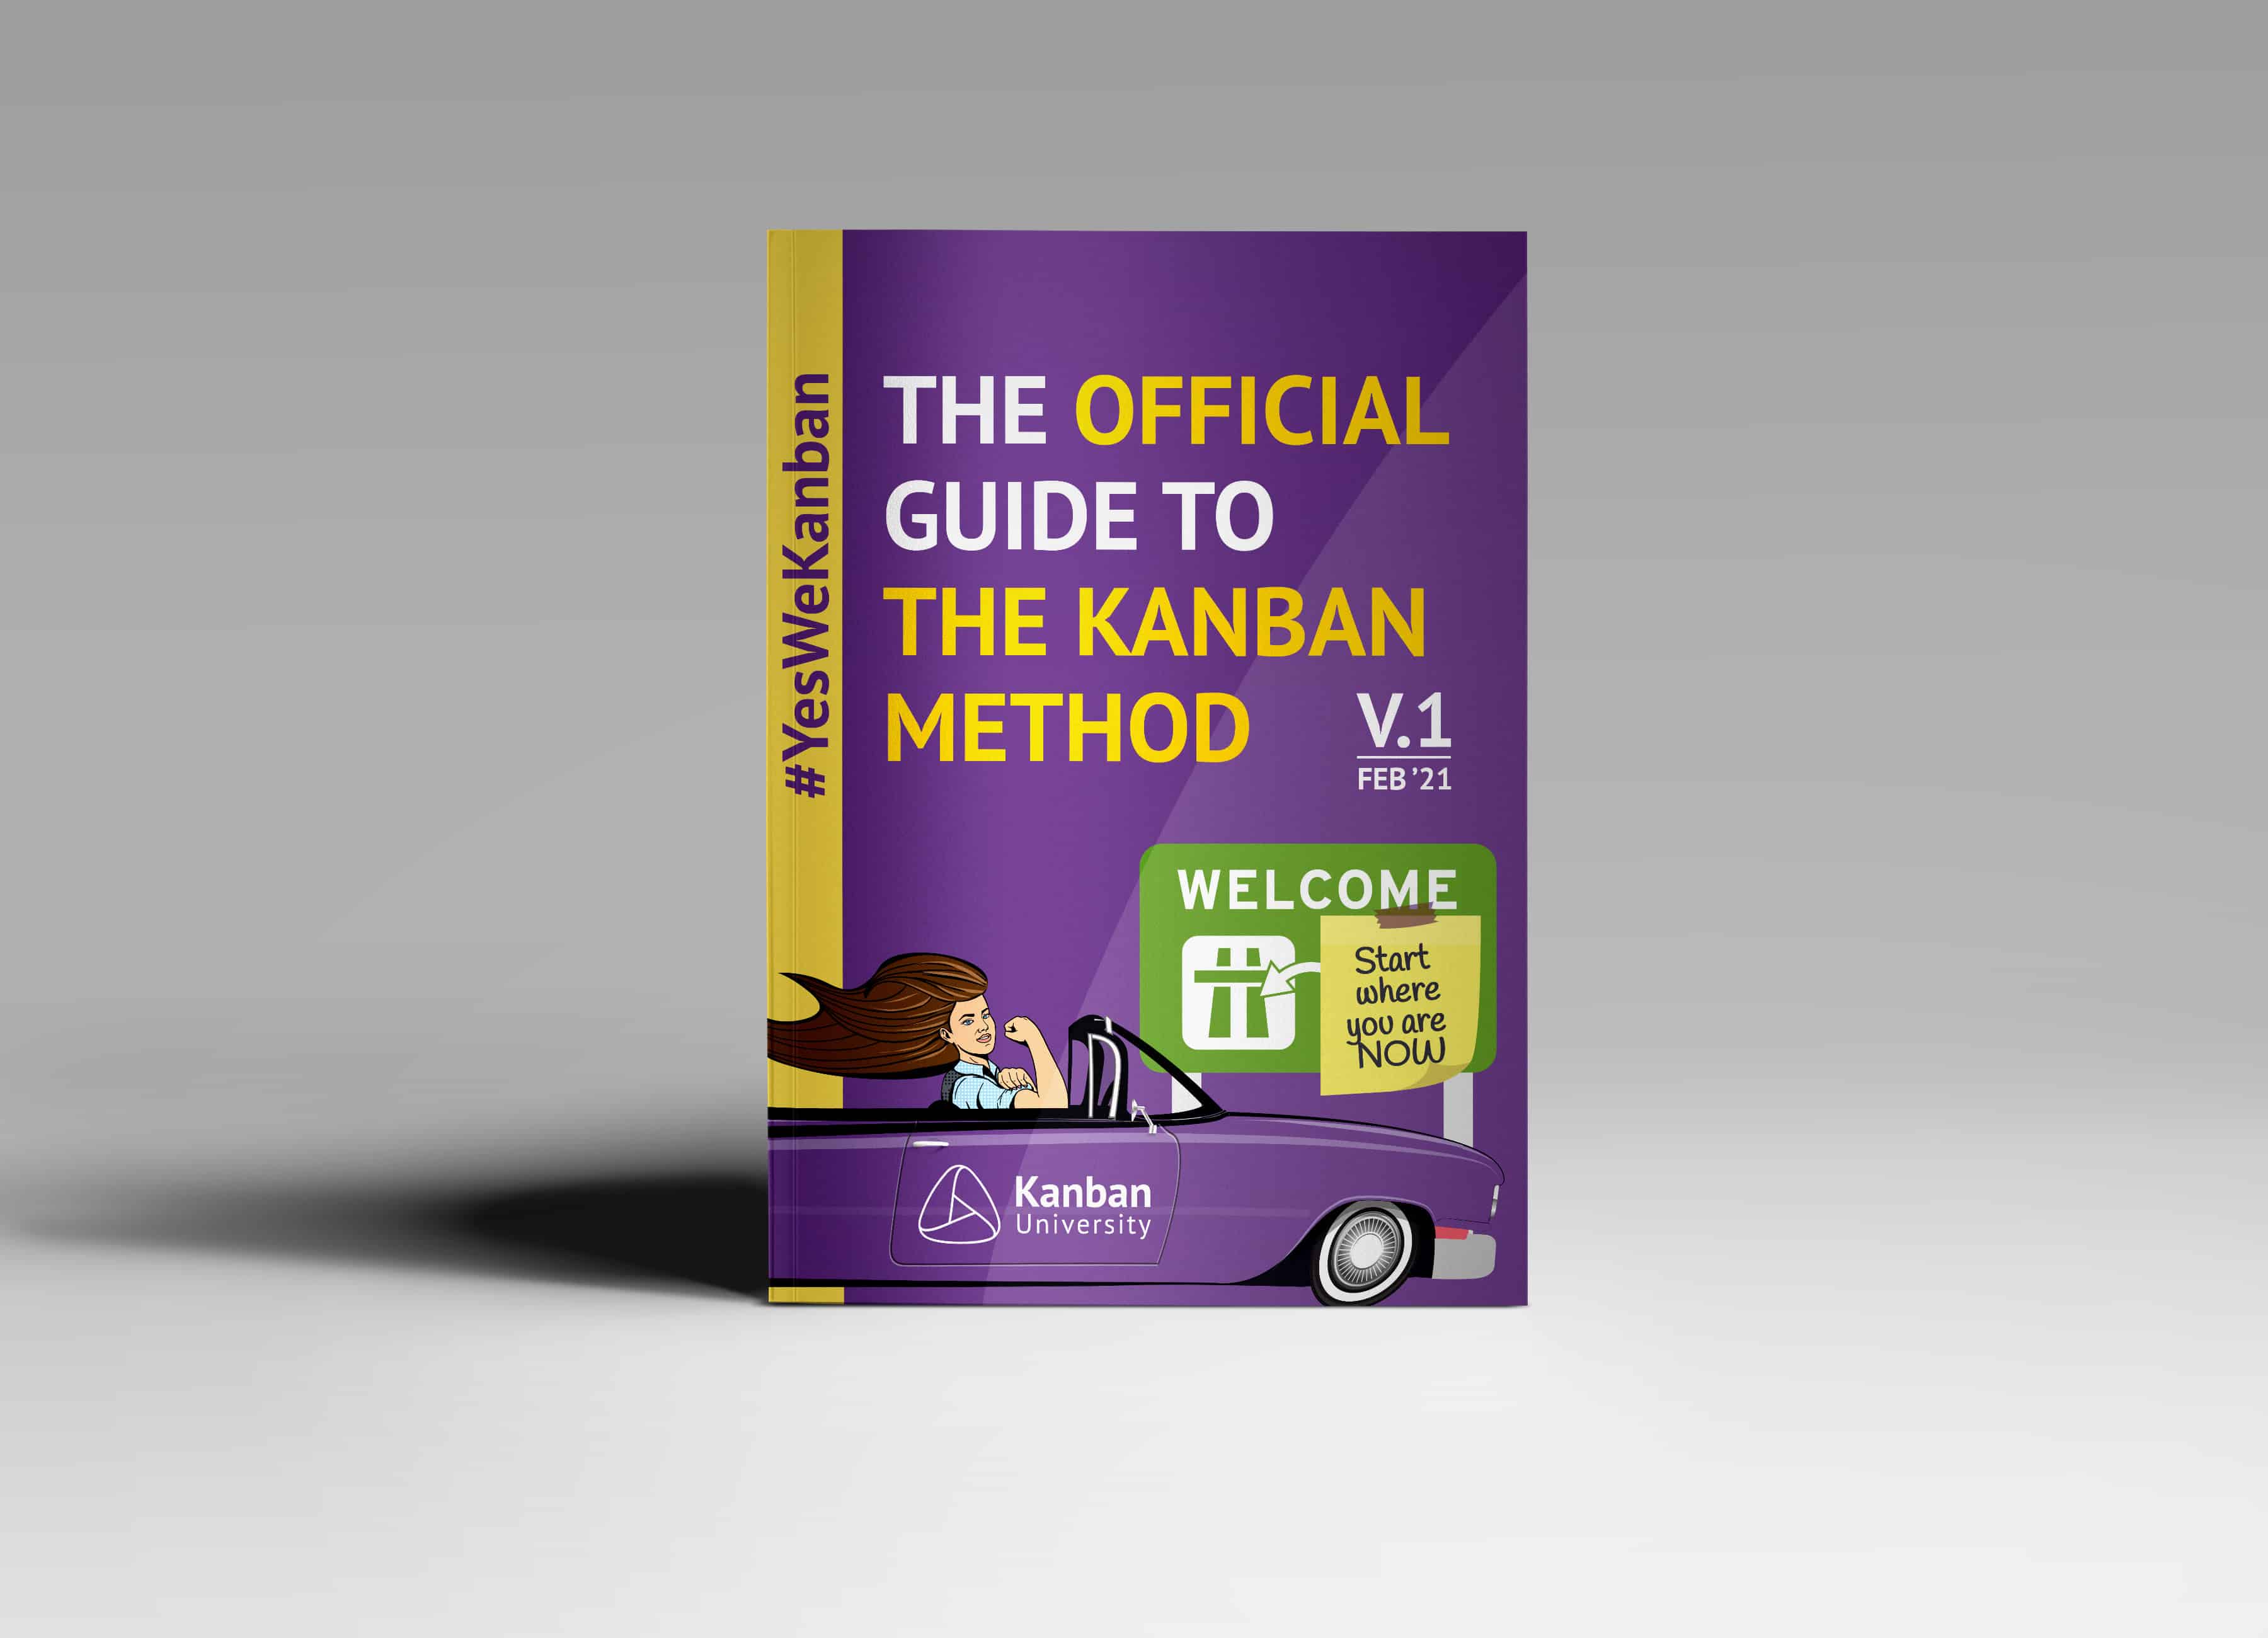 The Official Kanban Guide V1 by Kanban University [2021.02]